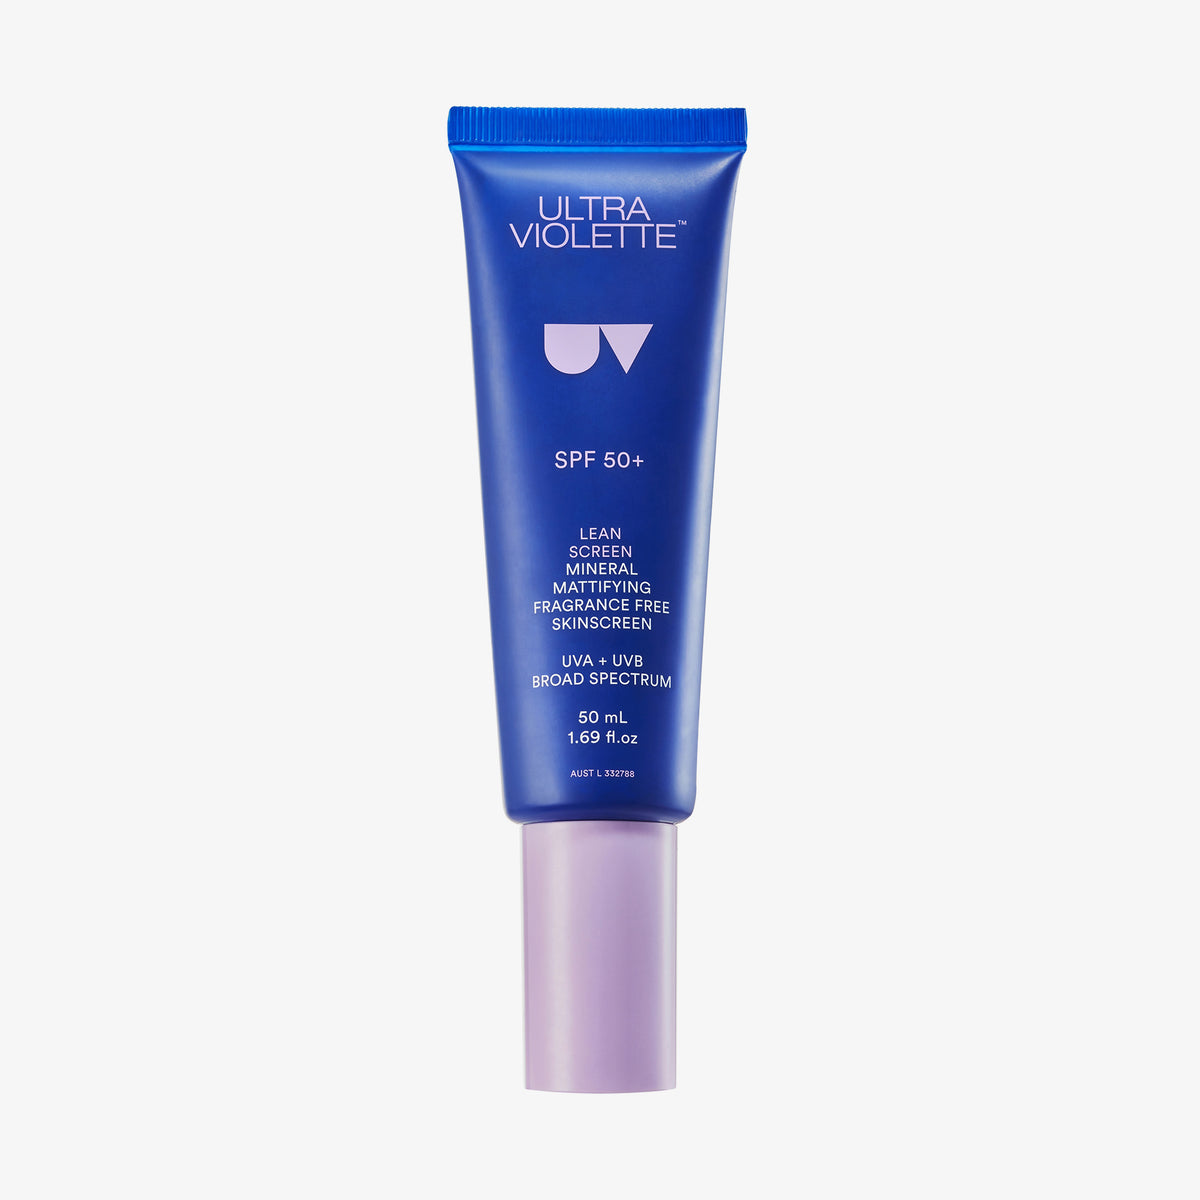 Ultra Violette | Lean Screen Mineral Mattifying Fragrance Free Skinscreen SPF50+